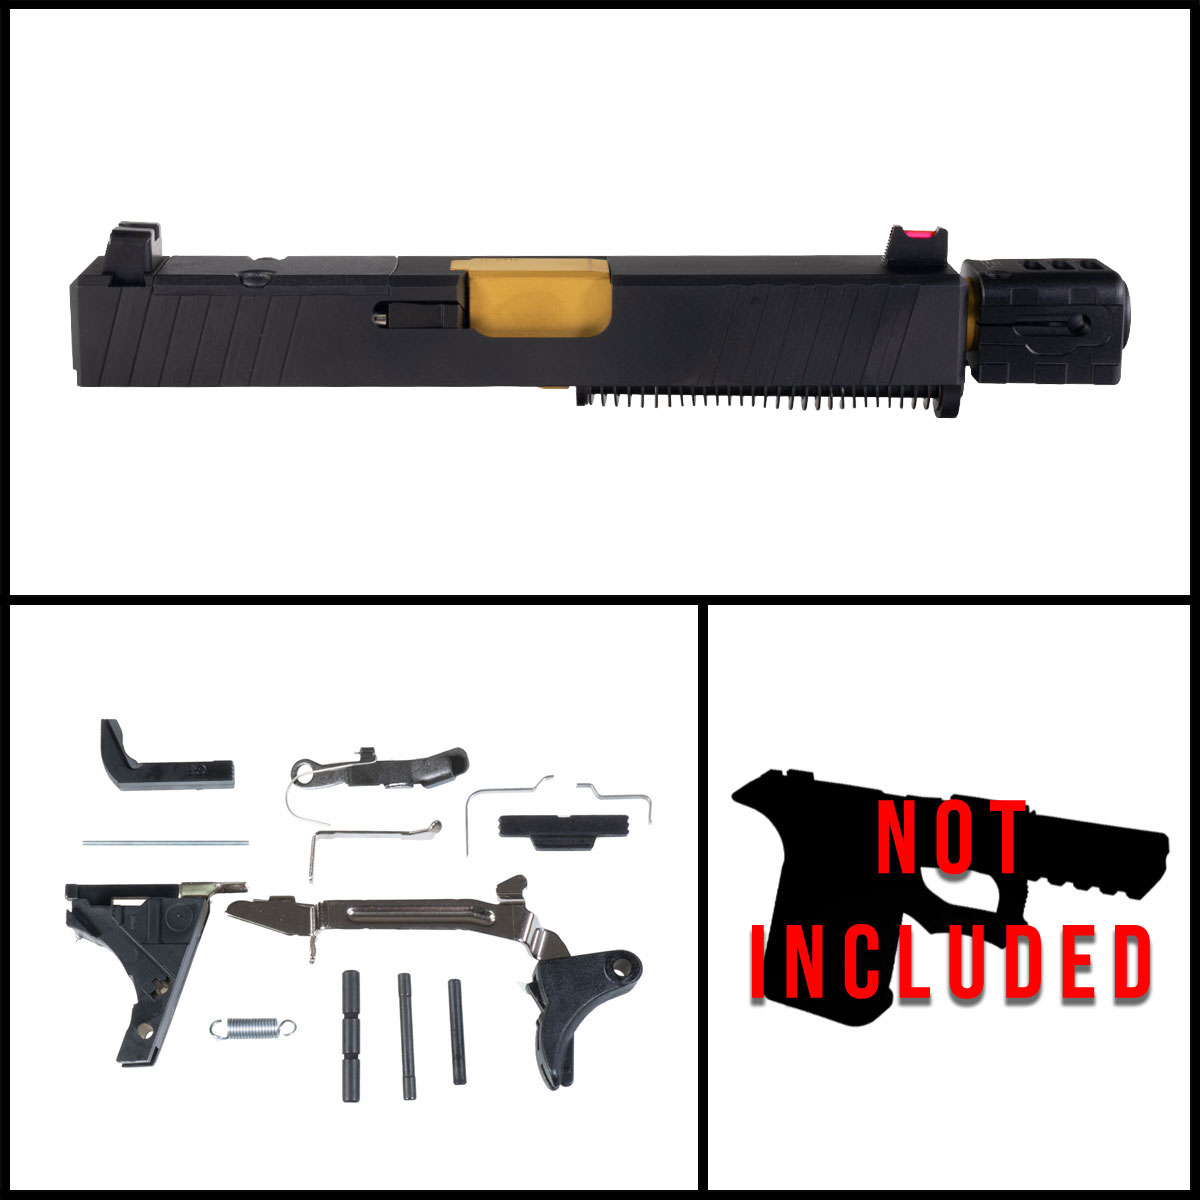 DTT 'Pum w/ Sylvan Arms Compensator' 9mm Full Pistol Build Kit (Everything Minus Frame) - Glock 19 Gen 1-3 Compatible